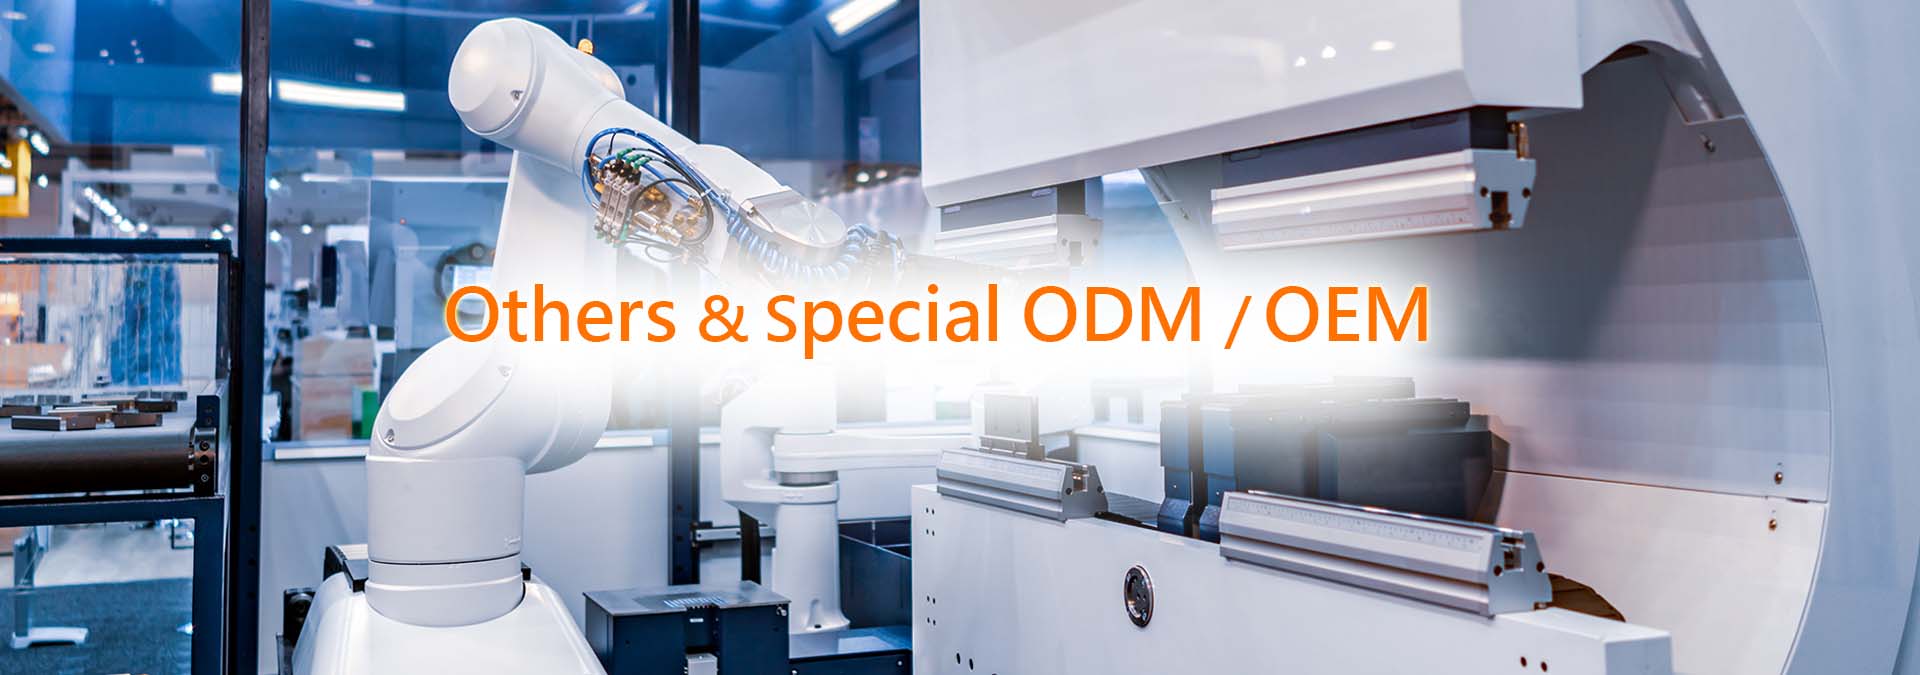 Other (& Special ODM / OEM)｜kimWell Electronics International